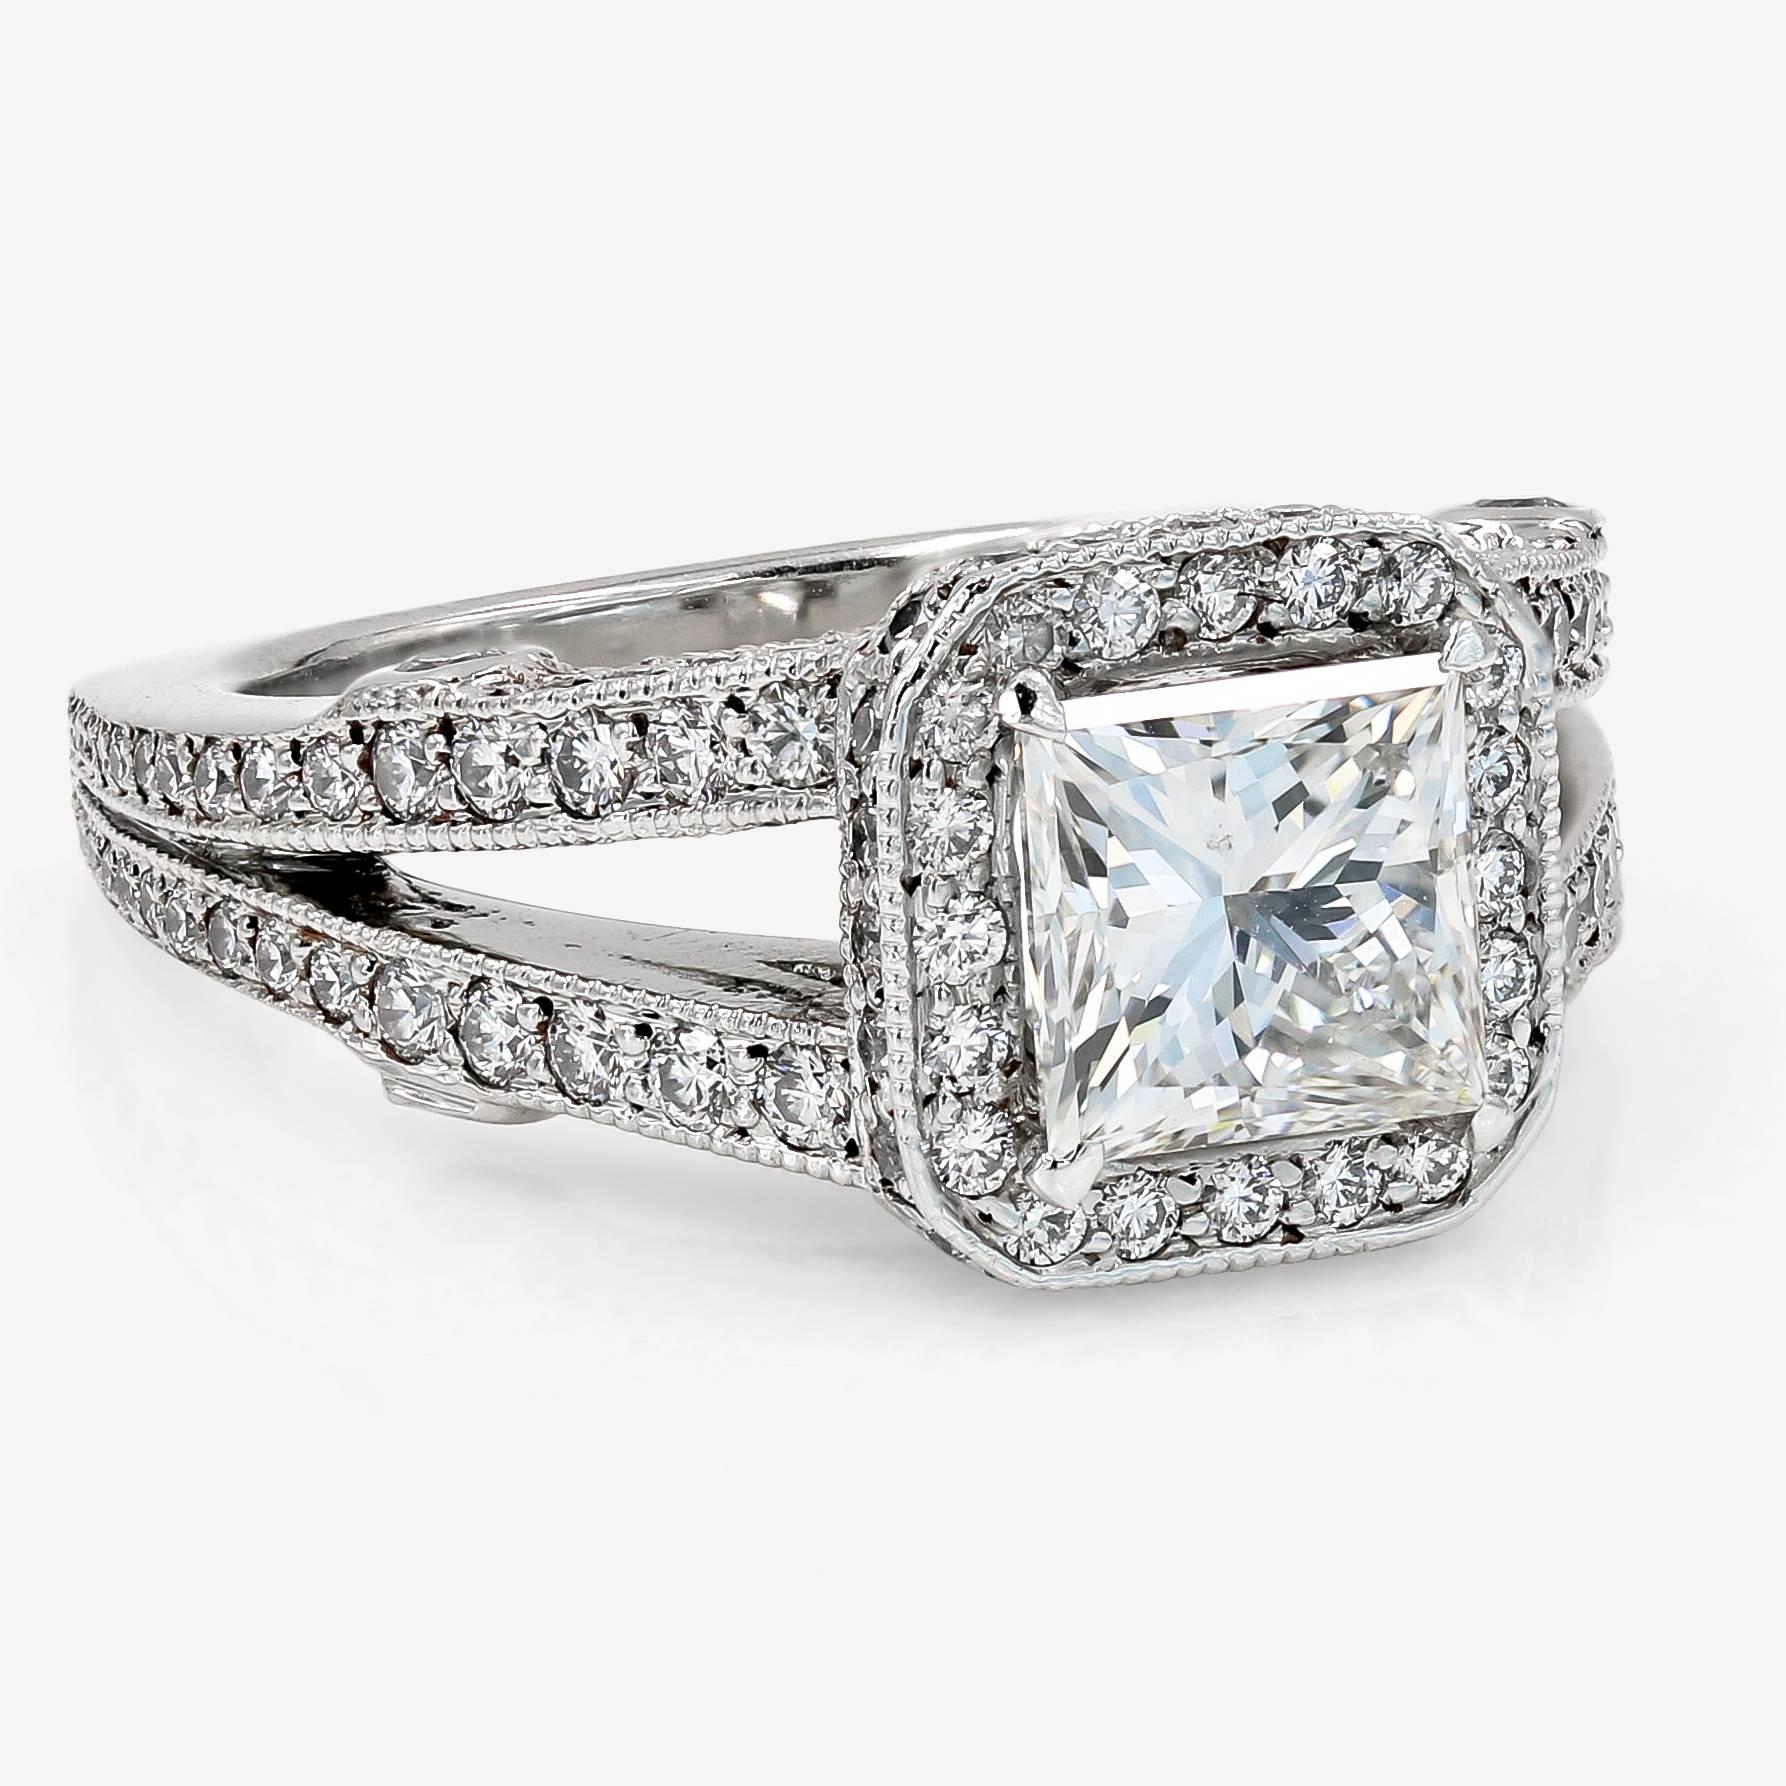 Contemporary GIA Certified 1.57 Carat Princess Cut Diamond Engagement Ring